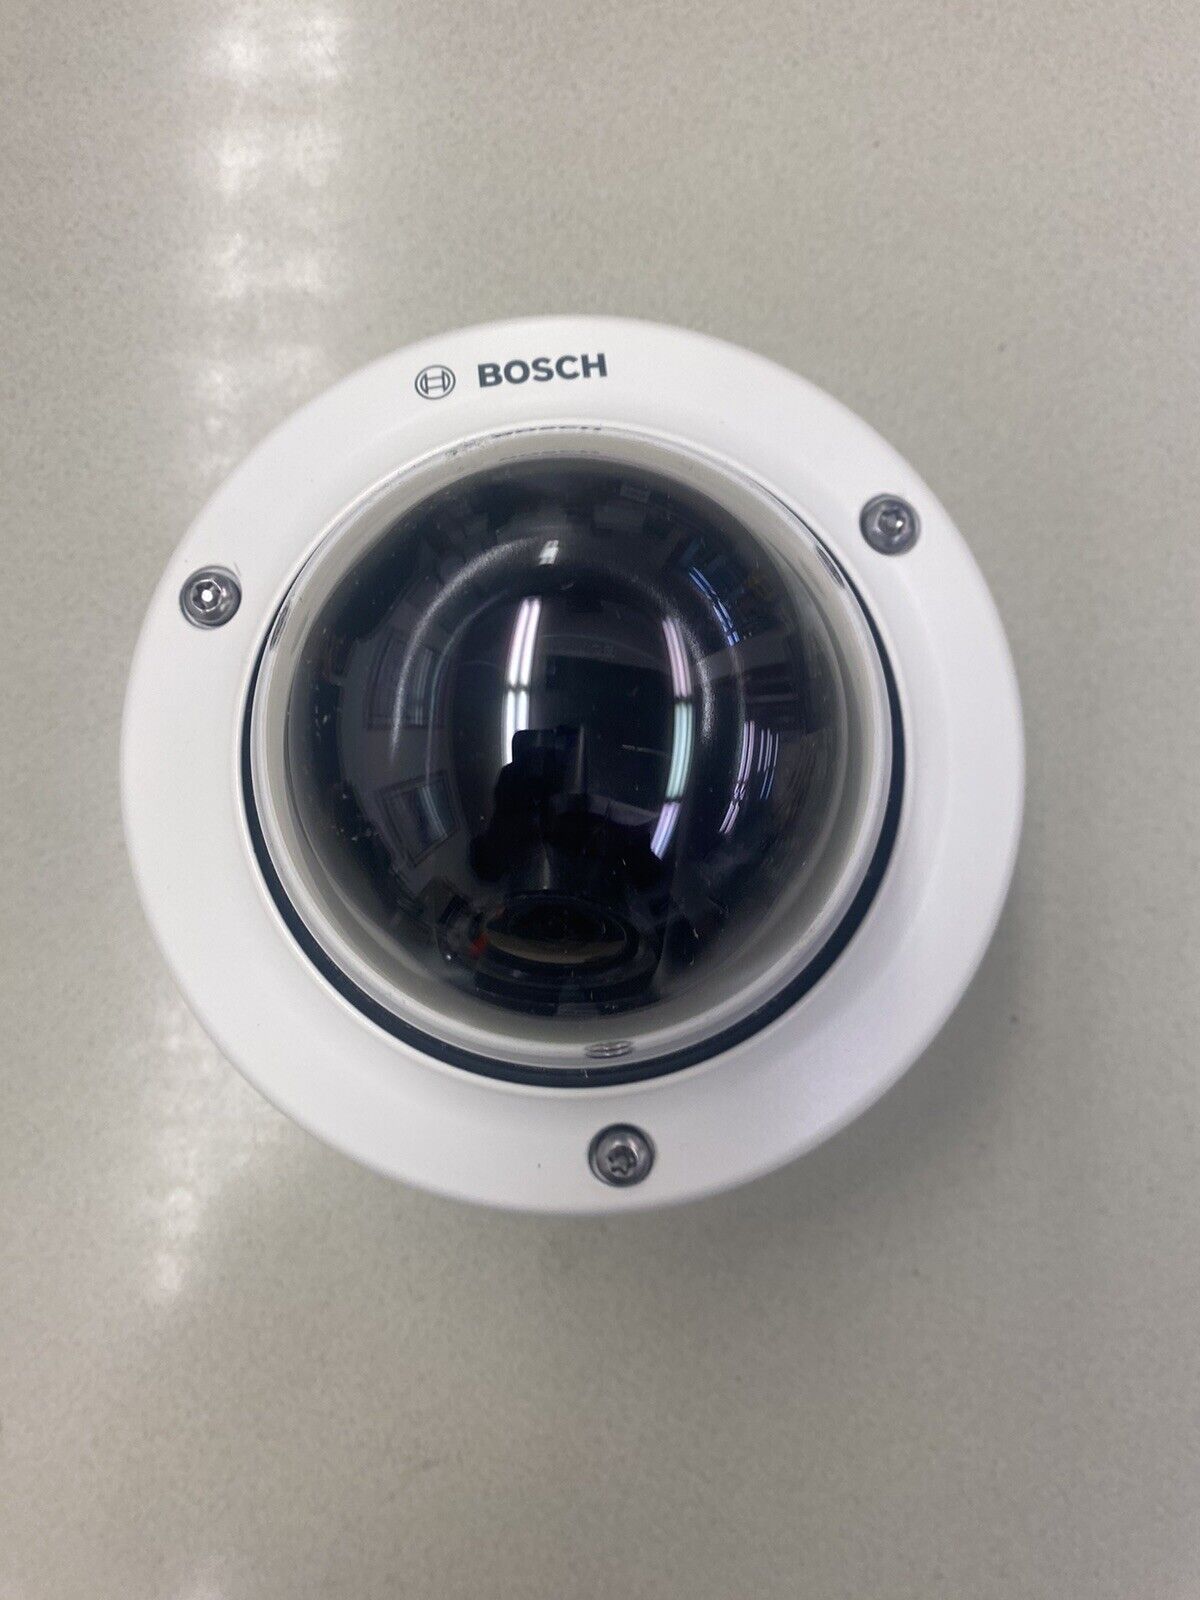 Bosch Nin-733-v03p Flexidome Ip Starlight 7000 Vr Dome Camera 3-9 Mm